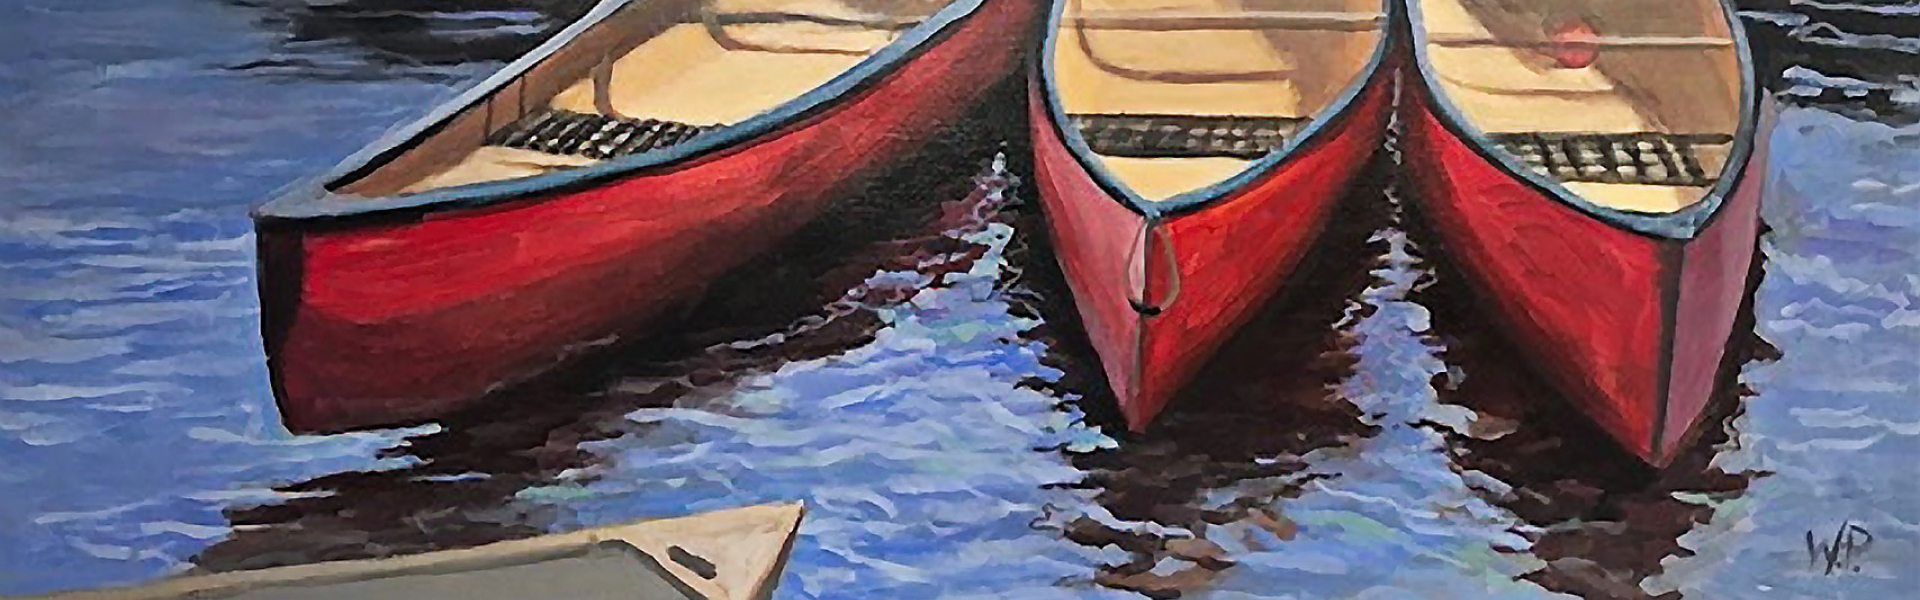 banner_WendyPalermo-Trio-of-Canoes-2022.20220310102022.jpg